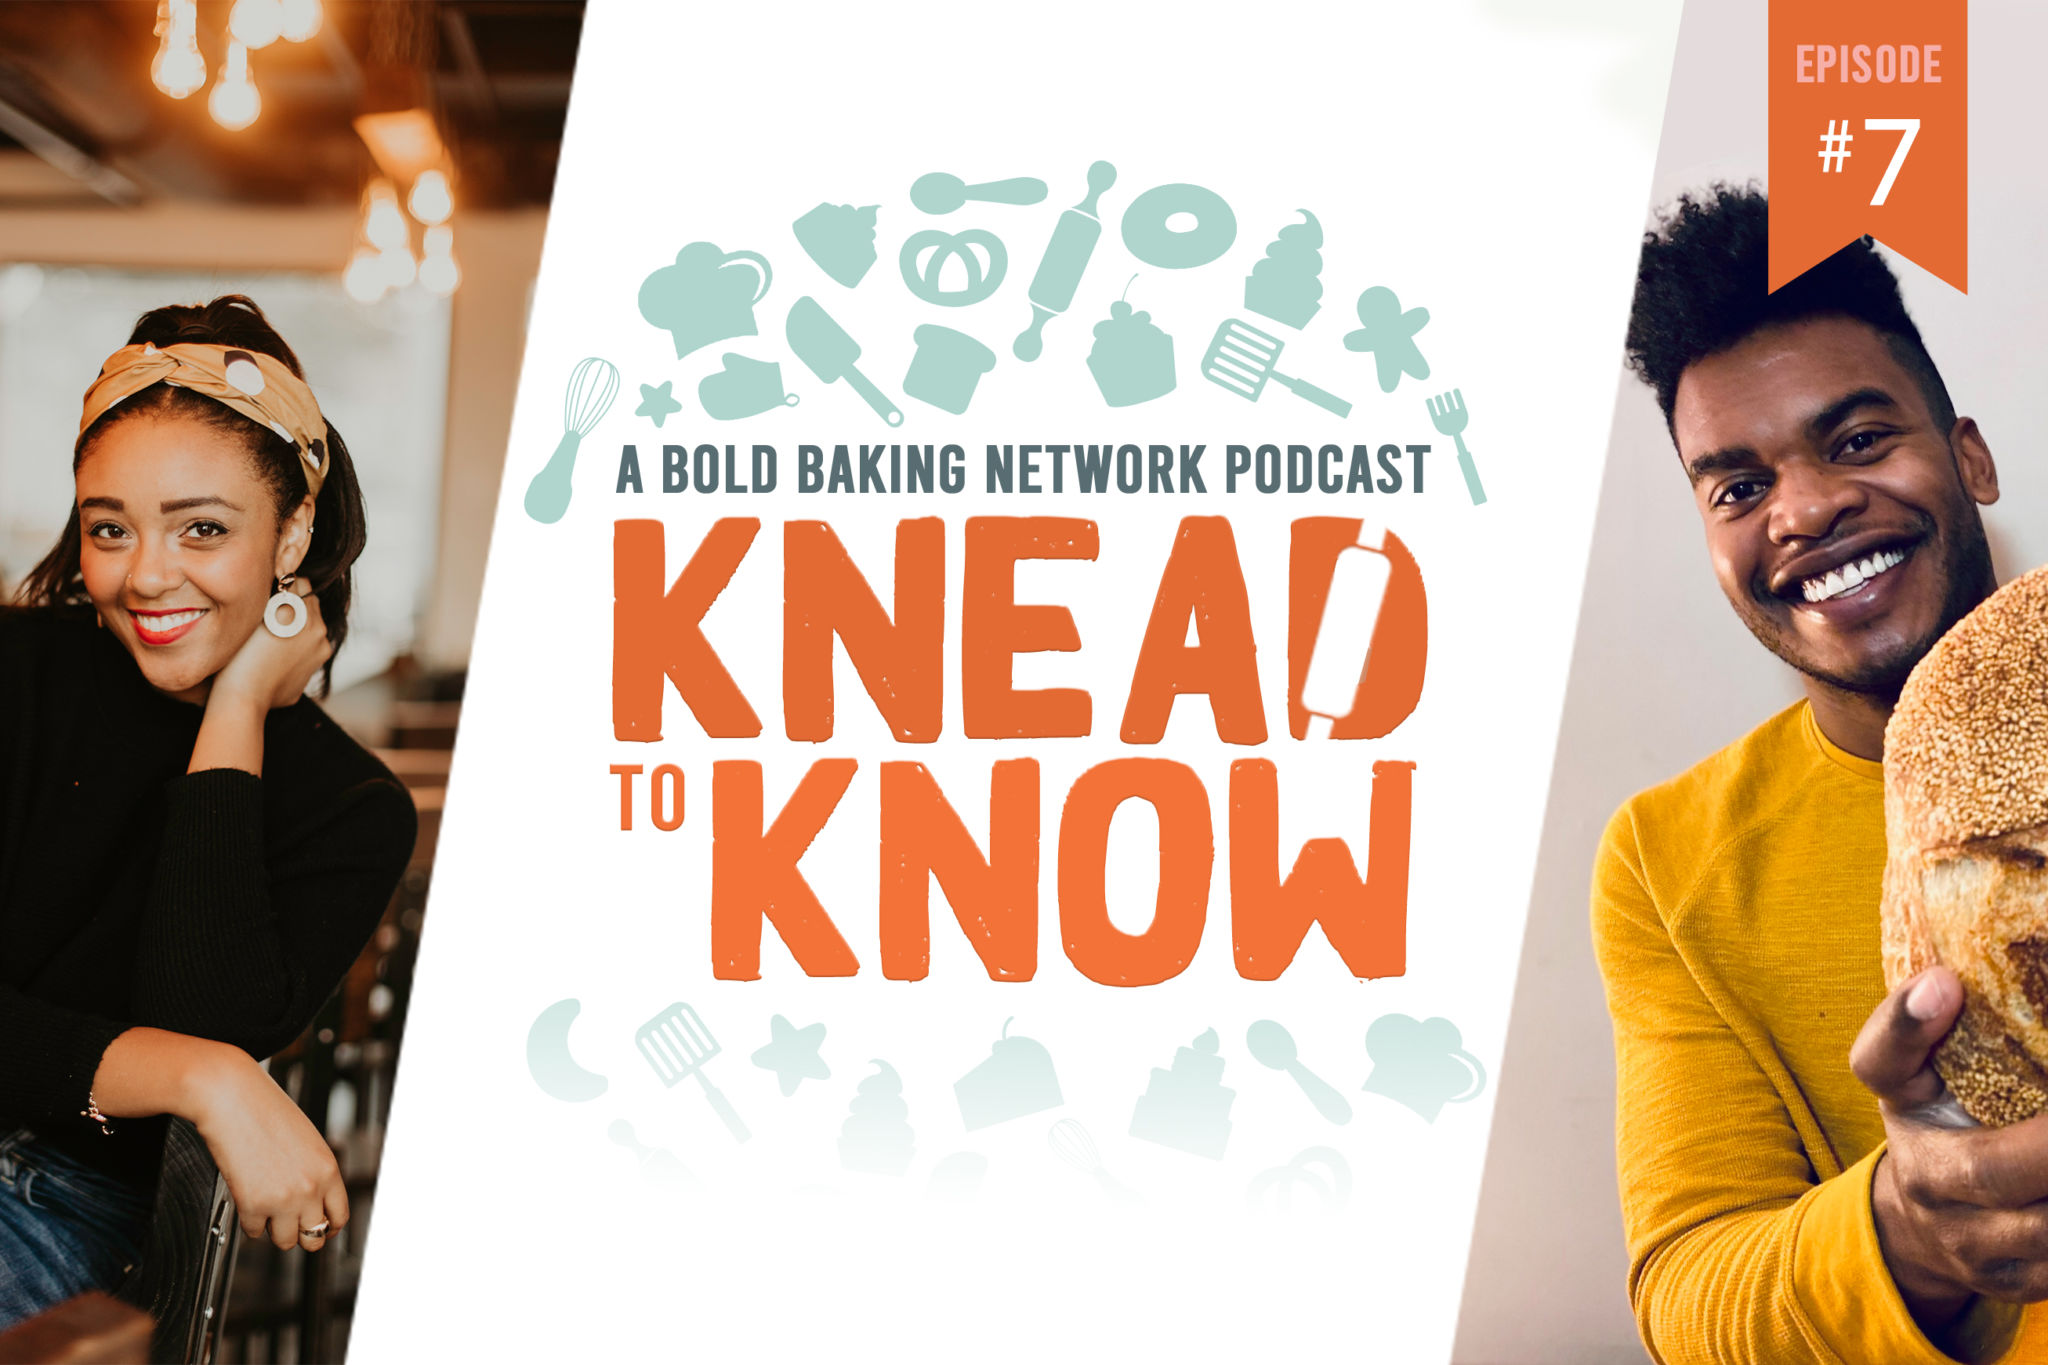 Knead to Know #7 with Max Kumangai